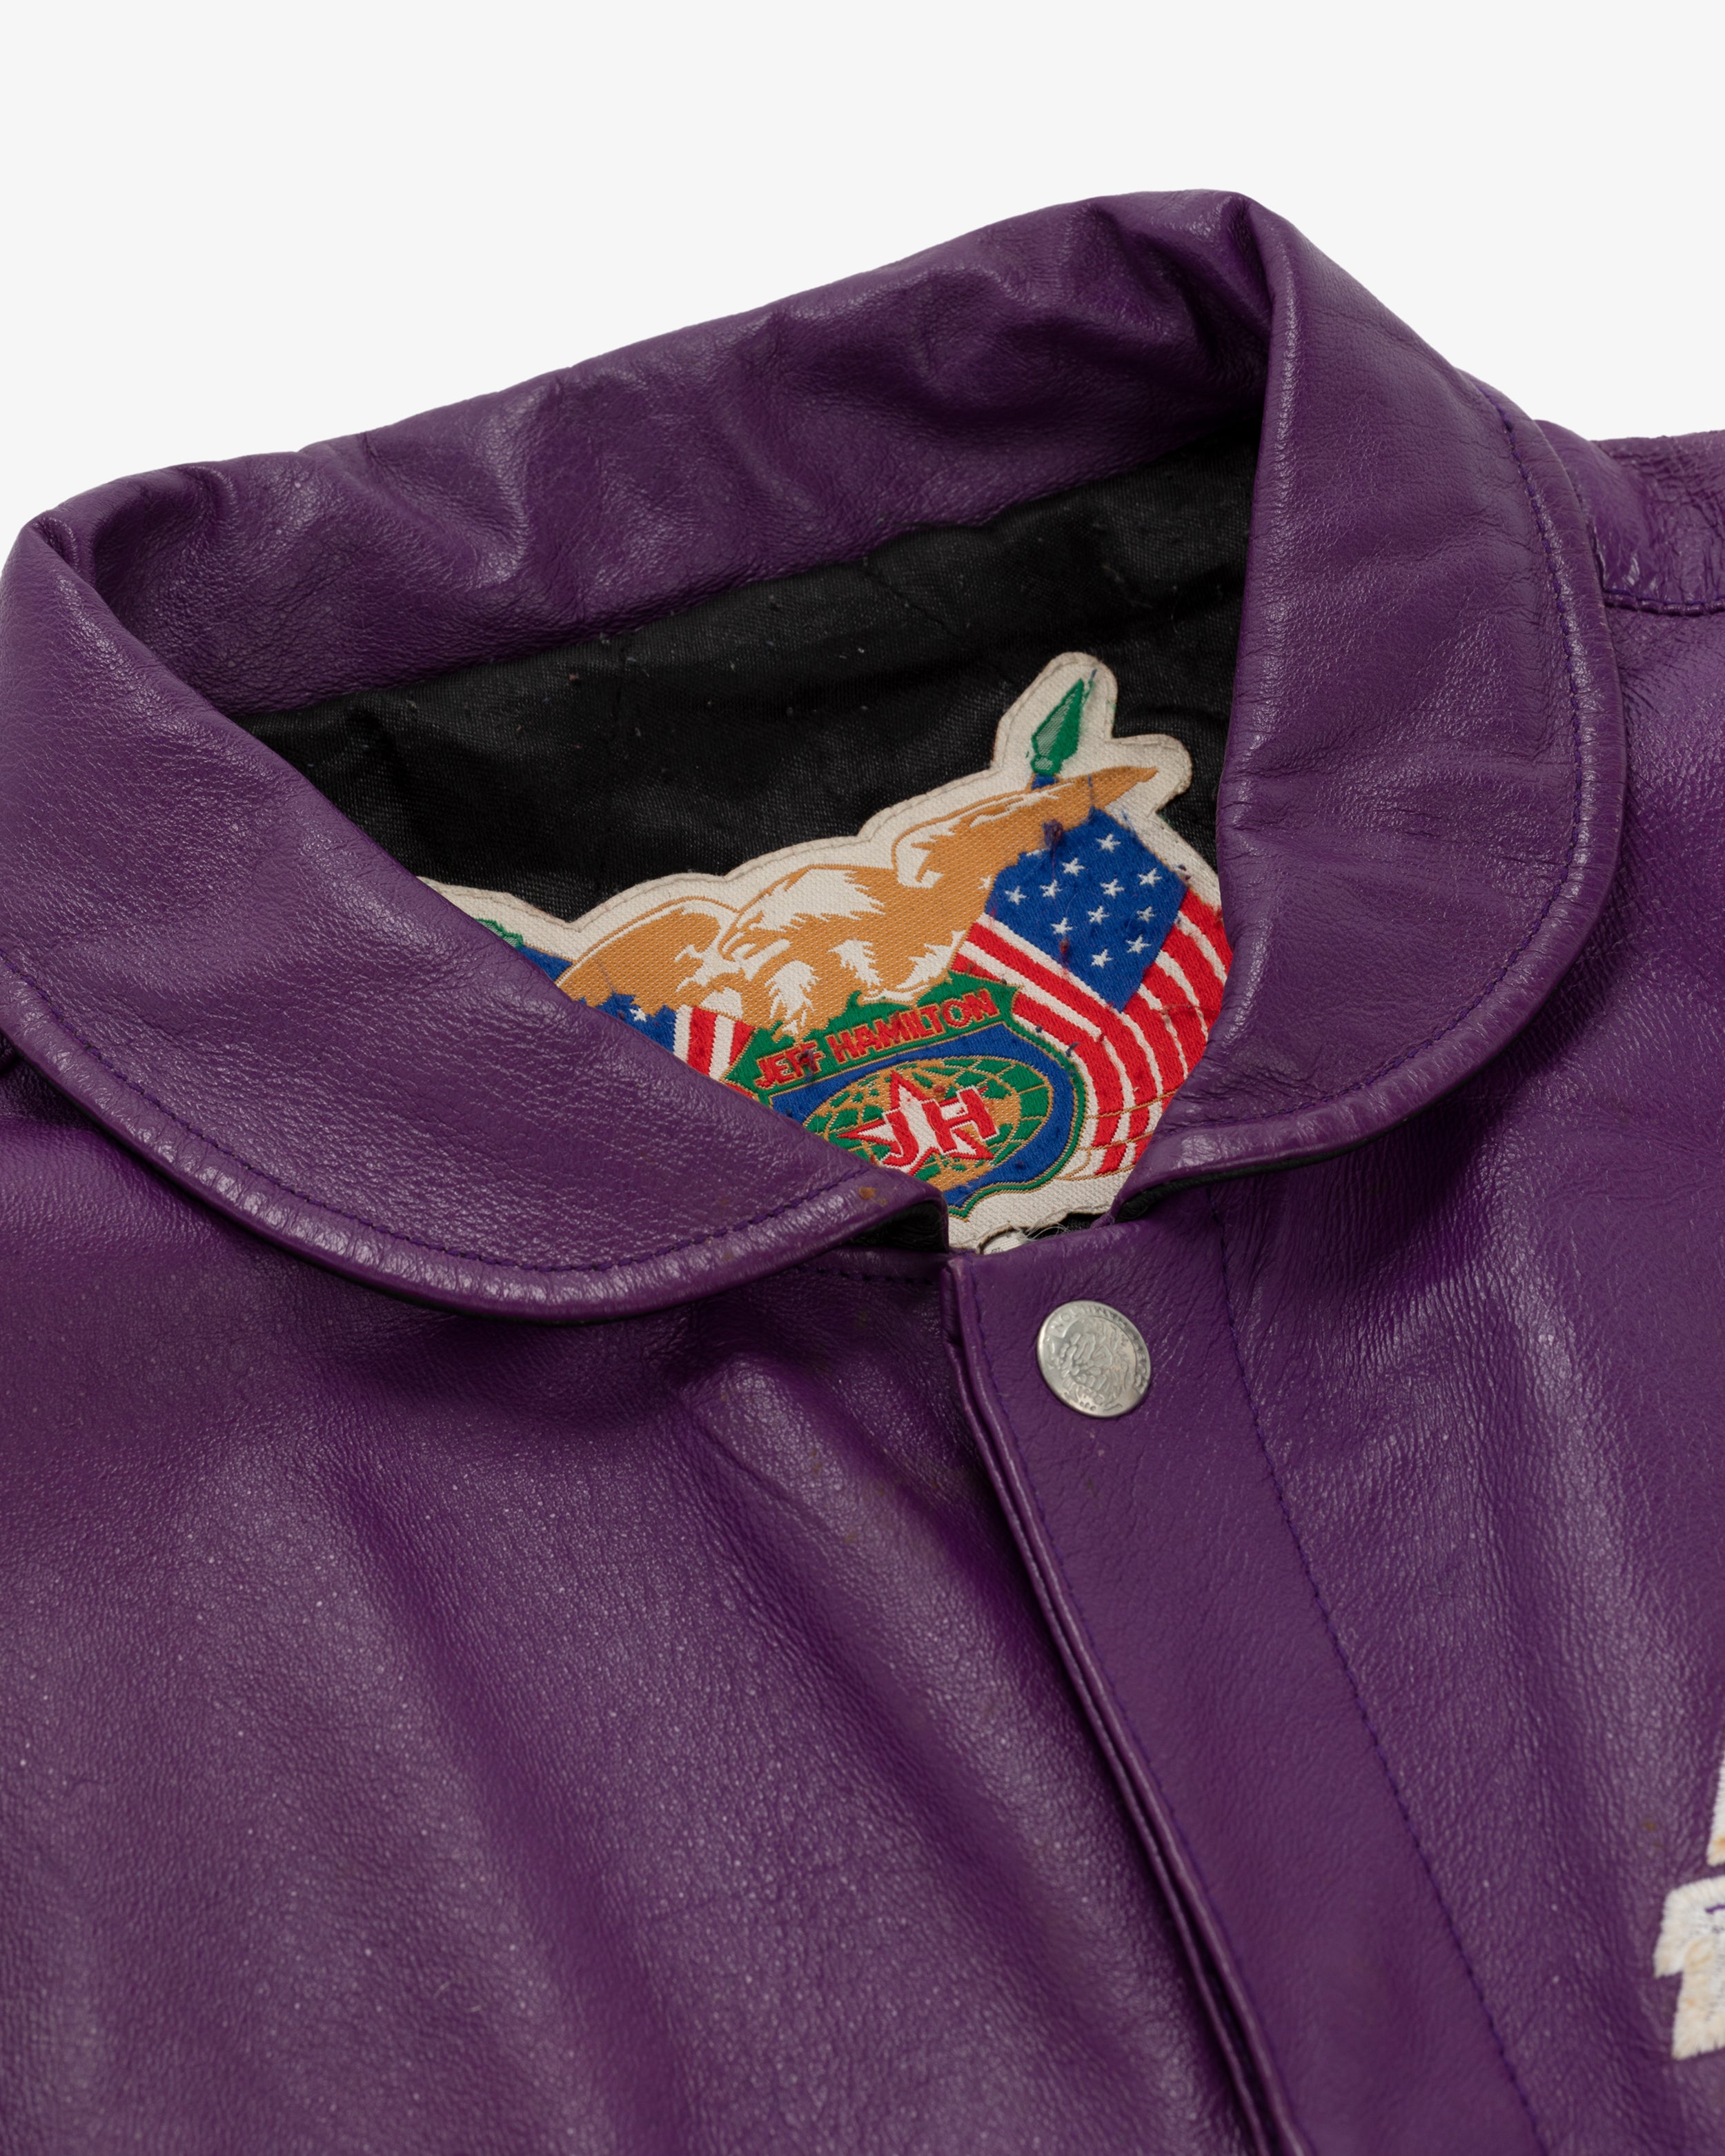 Jeff Hamilton Los Angeles Lakers Leather Jacket